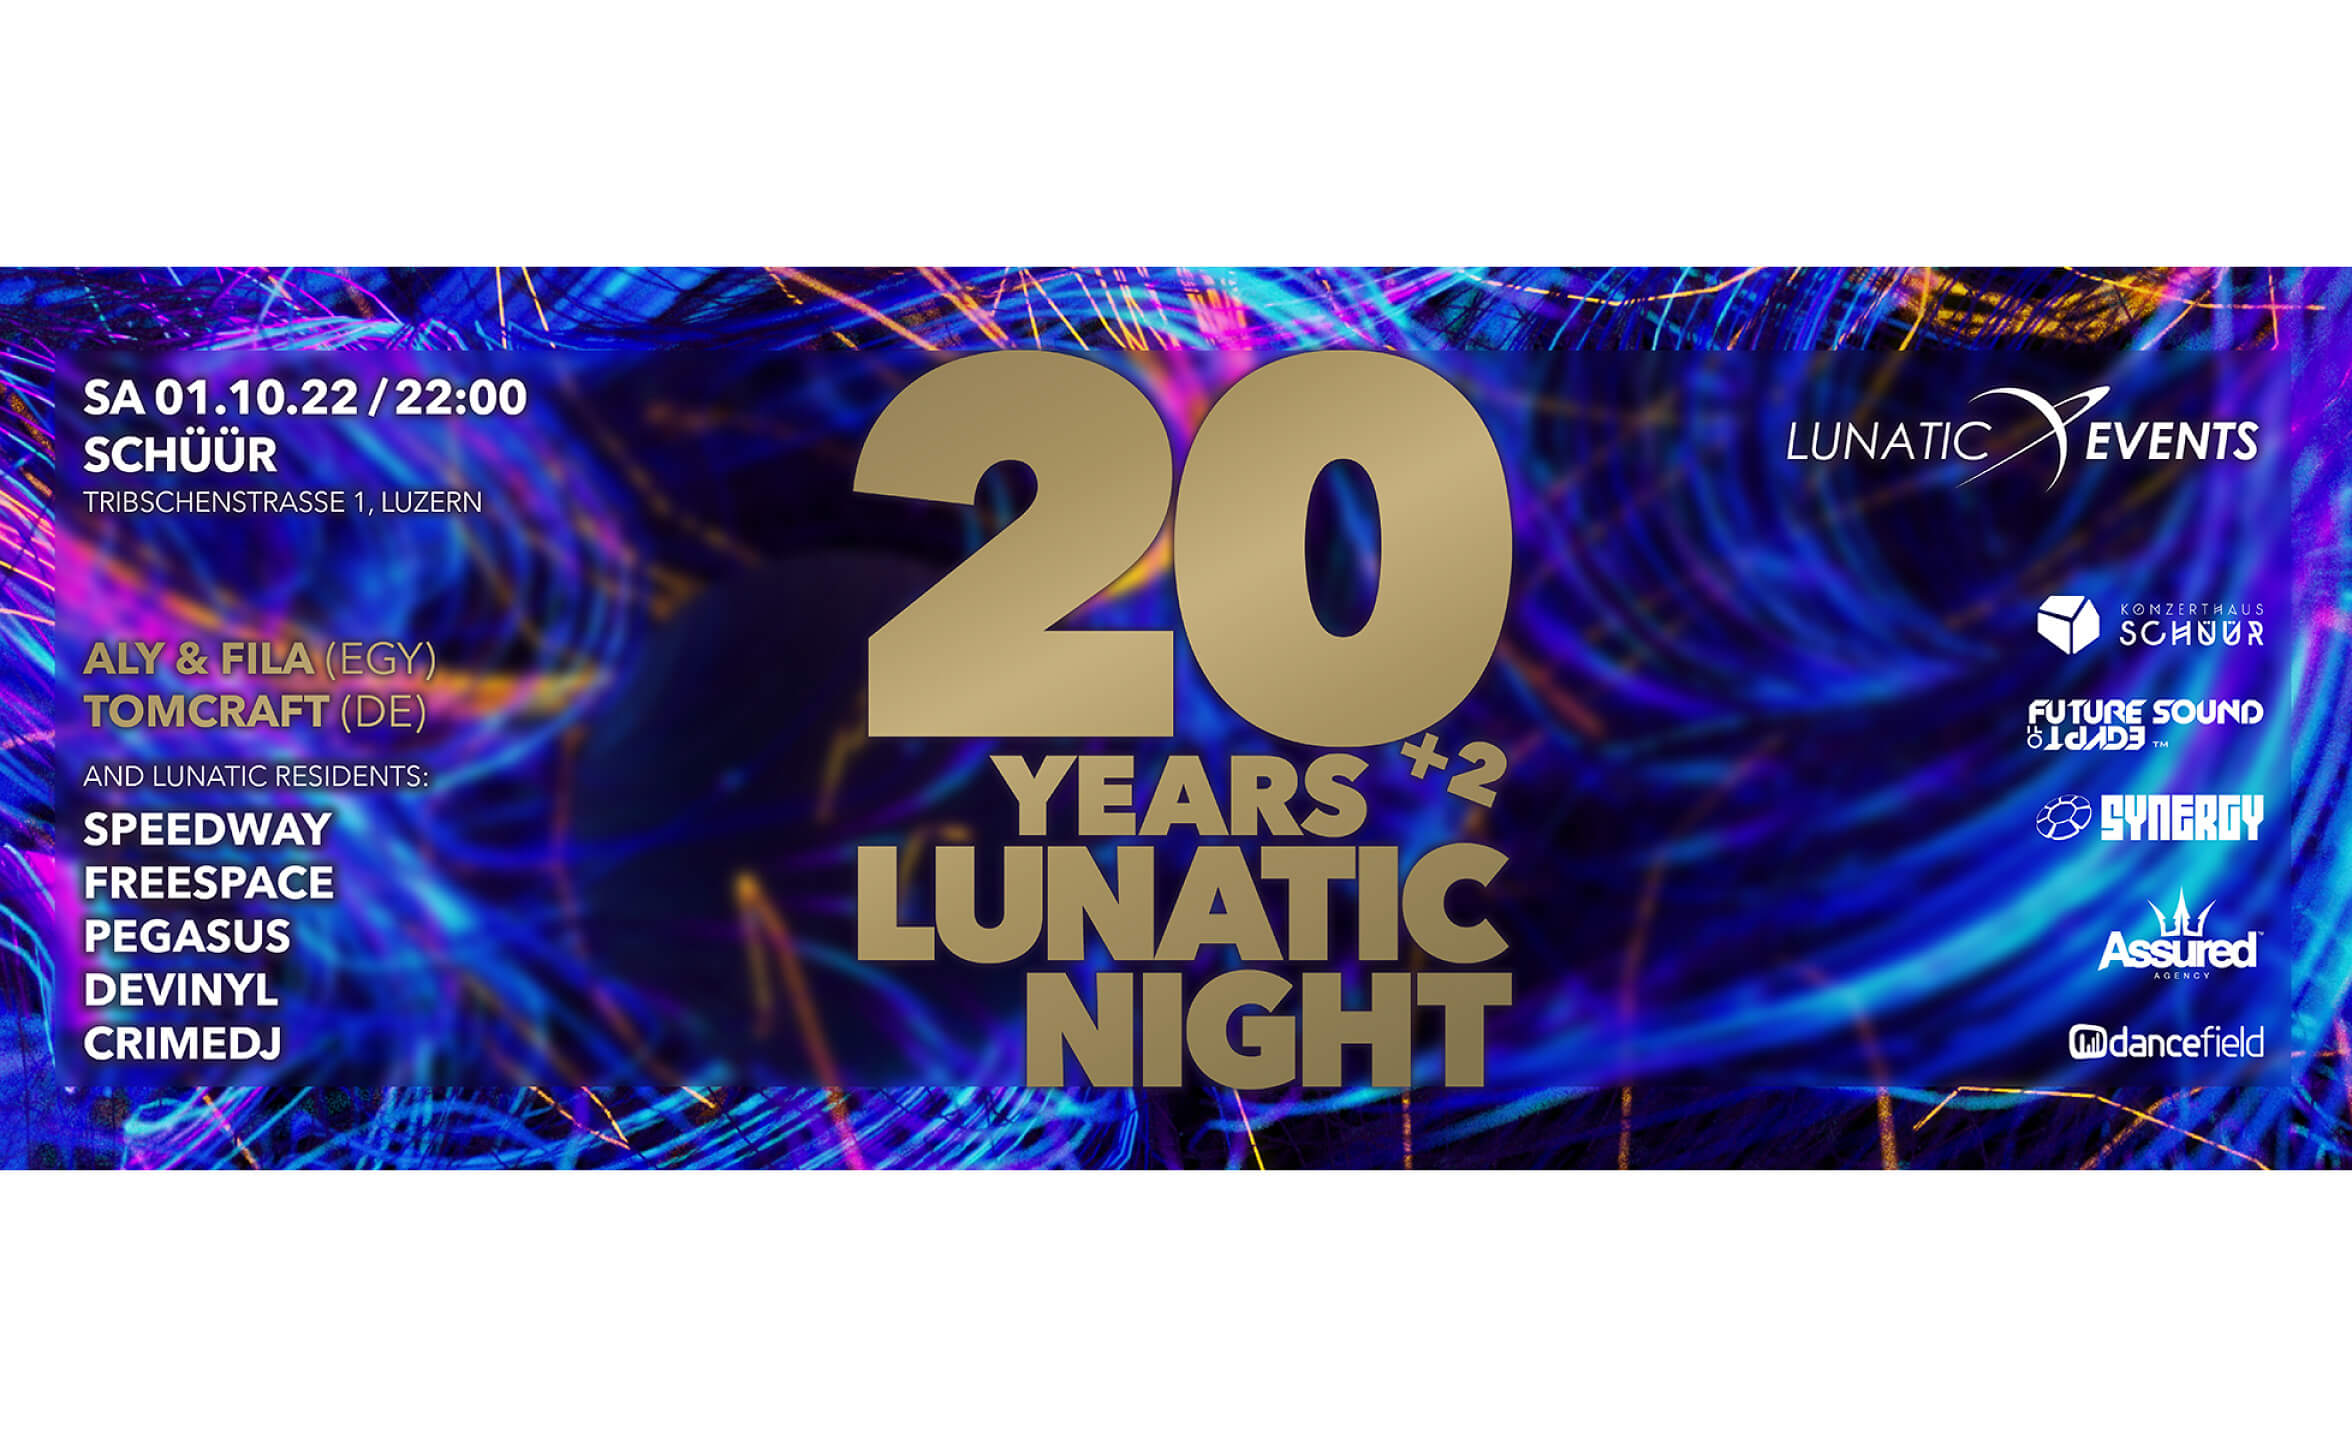 Event-Image for 'Lunatic Night 22 years Jubiläum'